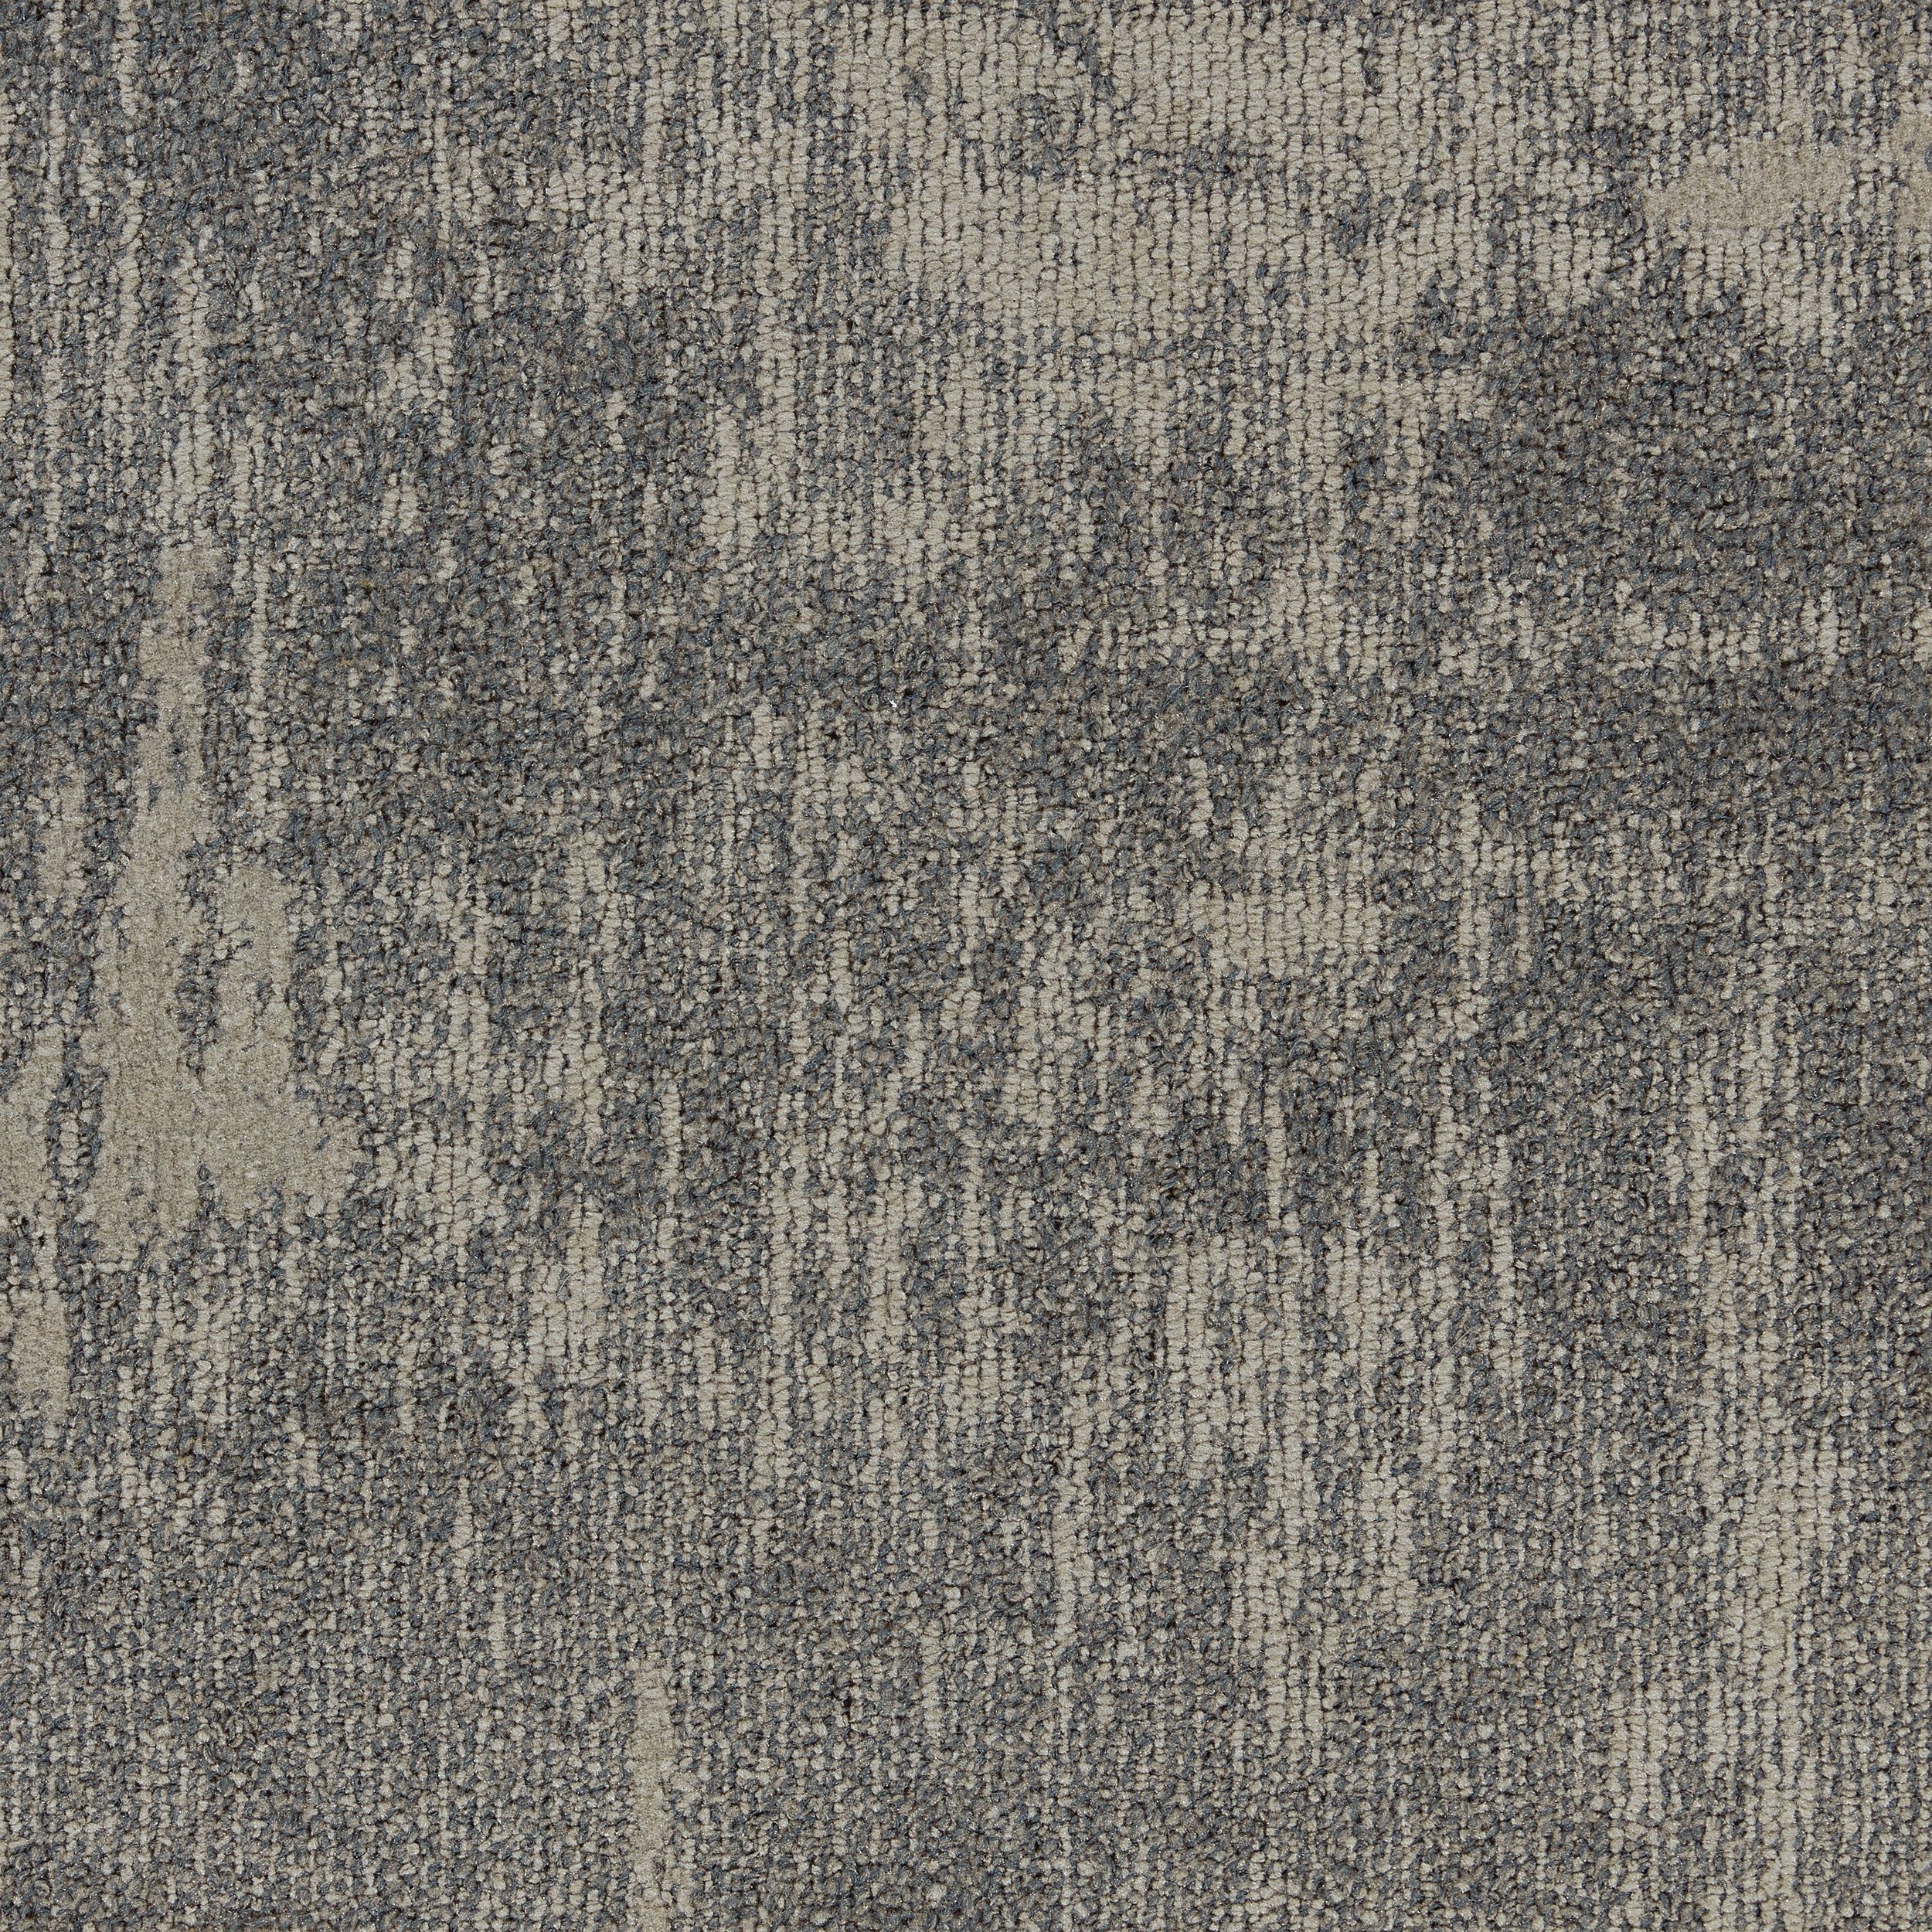 Conscient Carpet Tile In Refined Bildnummer 2